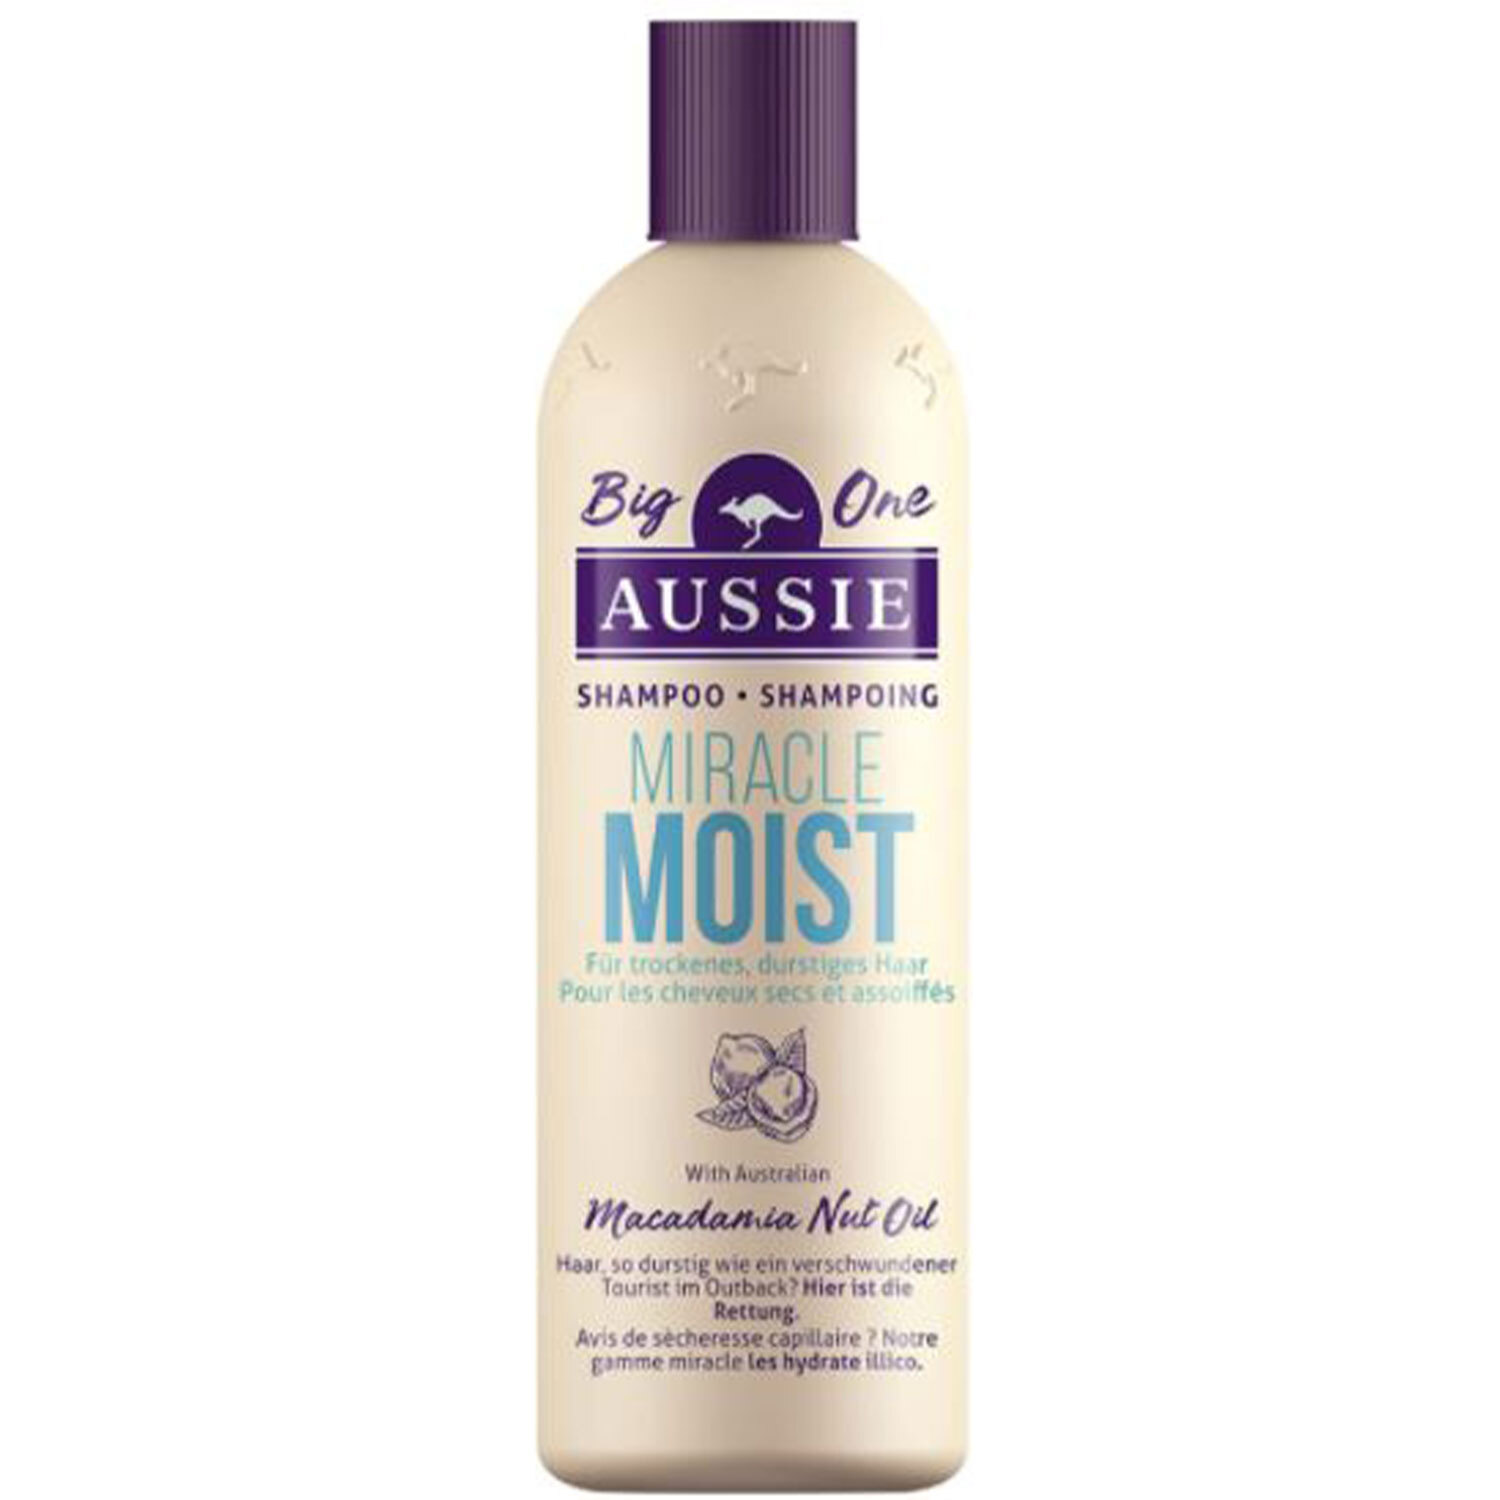 Aussie Miracle Moist Shampoo 250ml Image